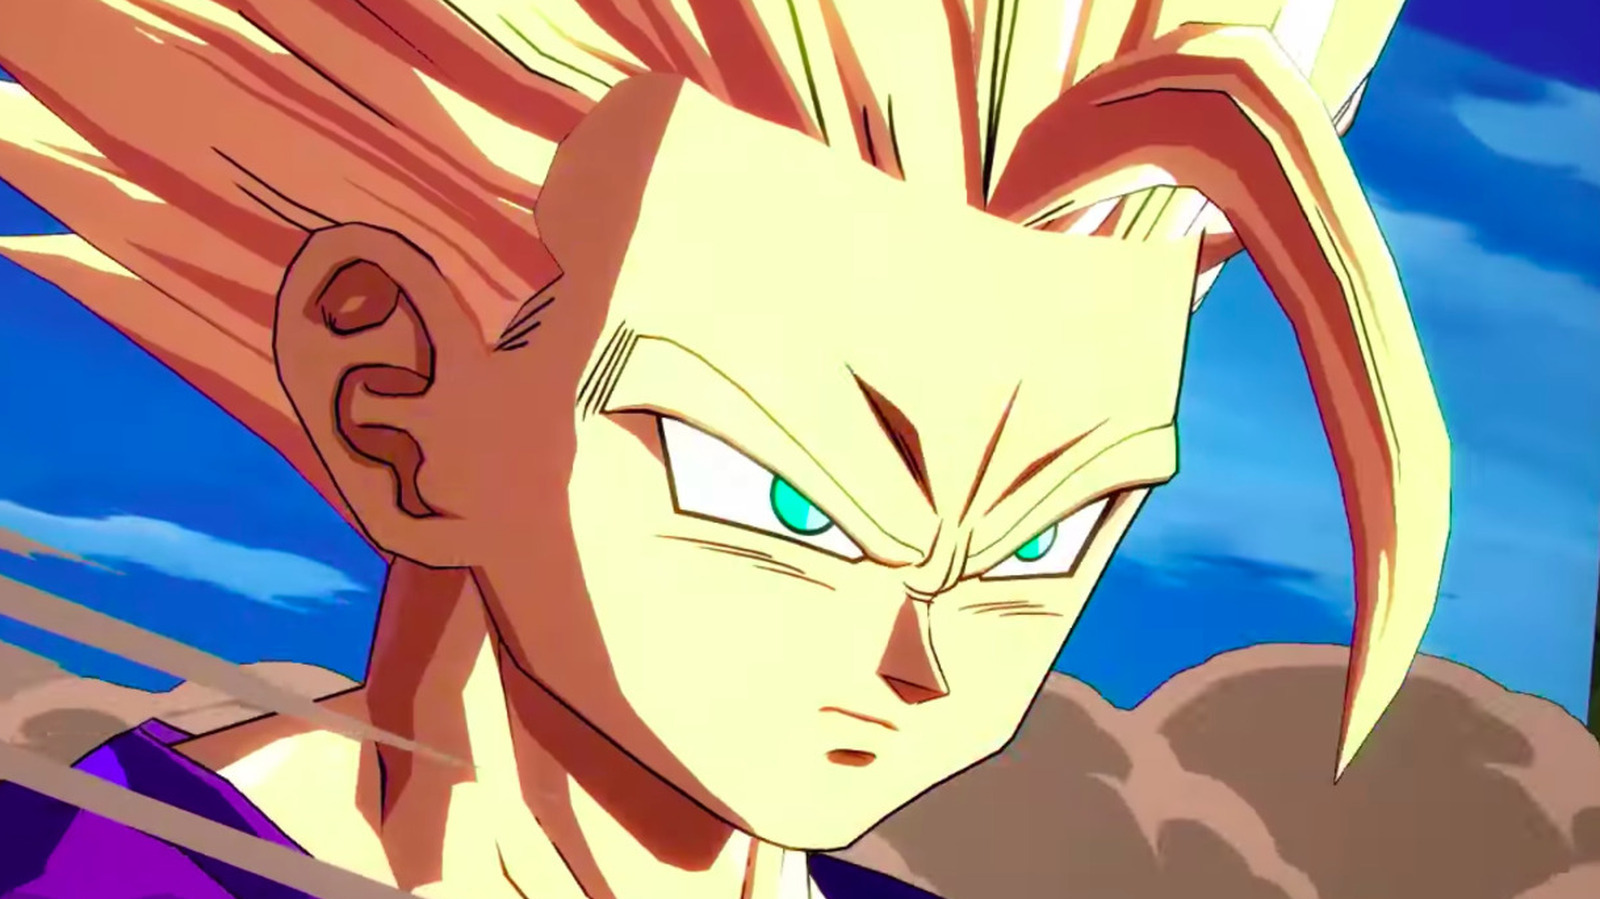 Goku May Soon No Longer Be Dragon Ball's Strongest Character